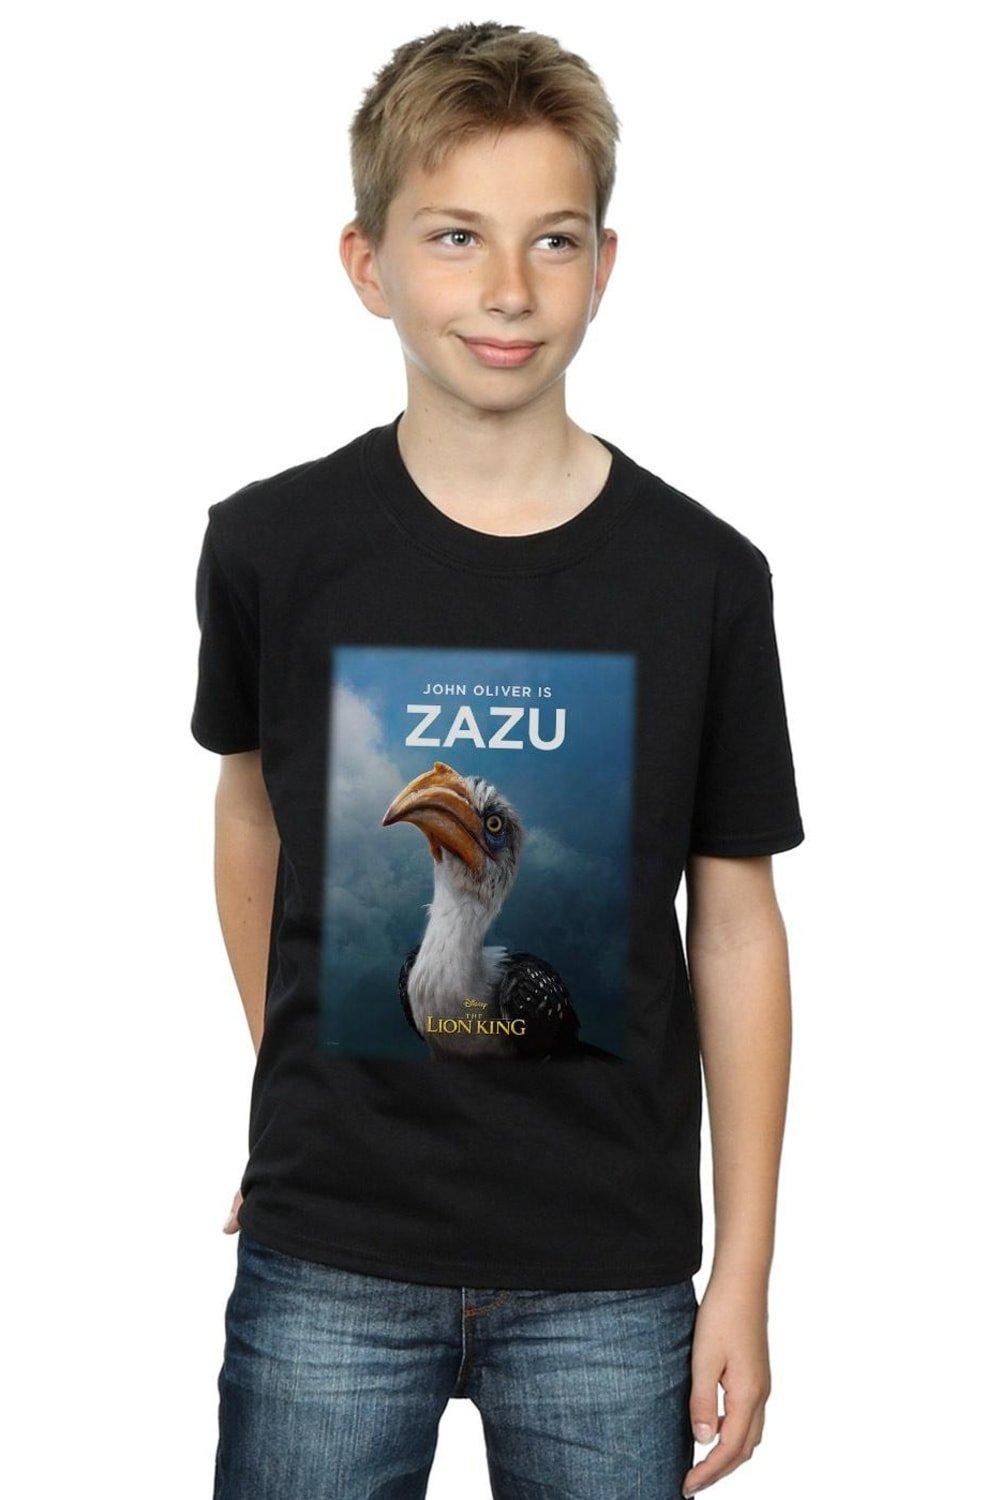 The Lion King Movie Zazu Poster T-Shirt